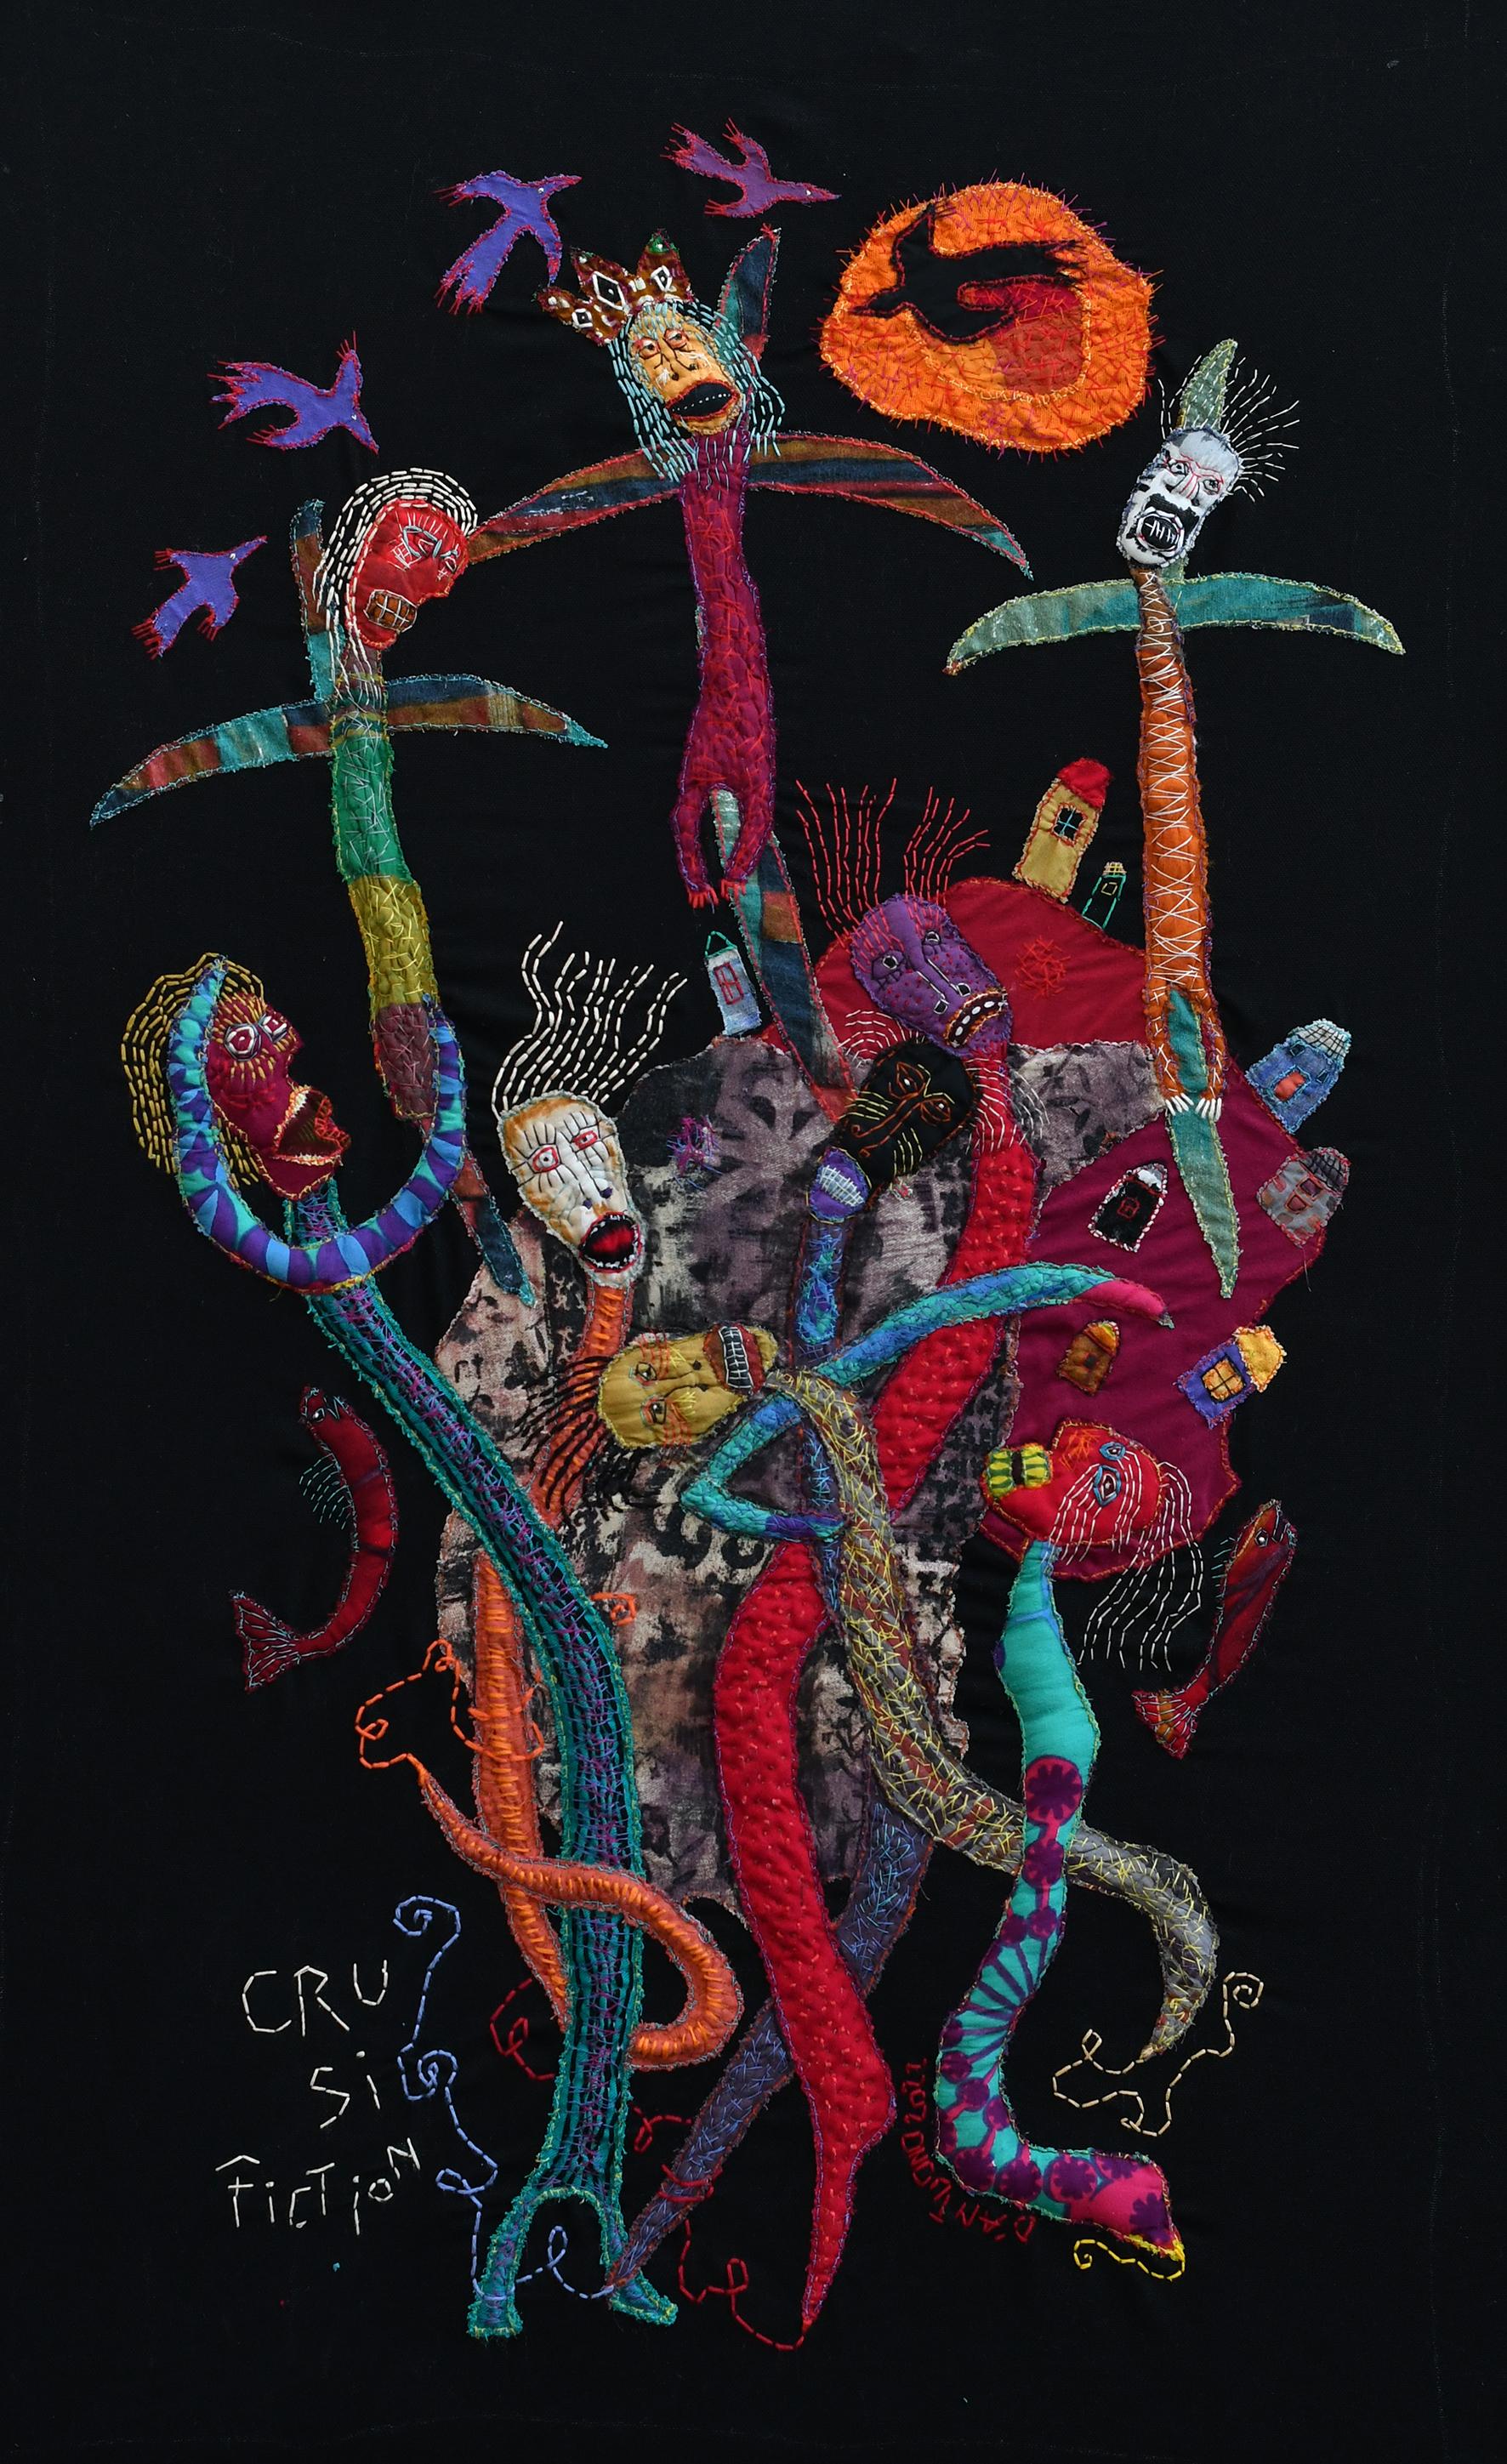 Cru si fiction Barbara d'Antuono 21e siècle art textile outsider contemporain